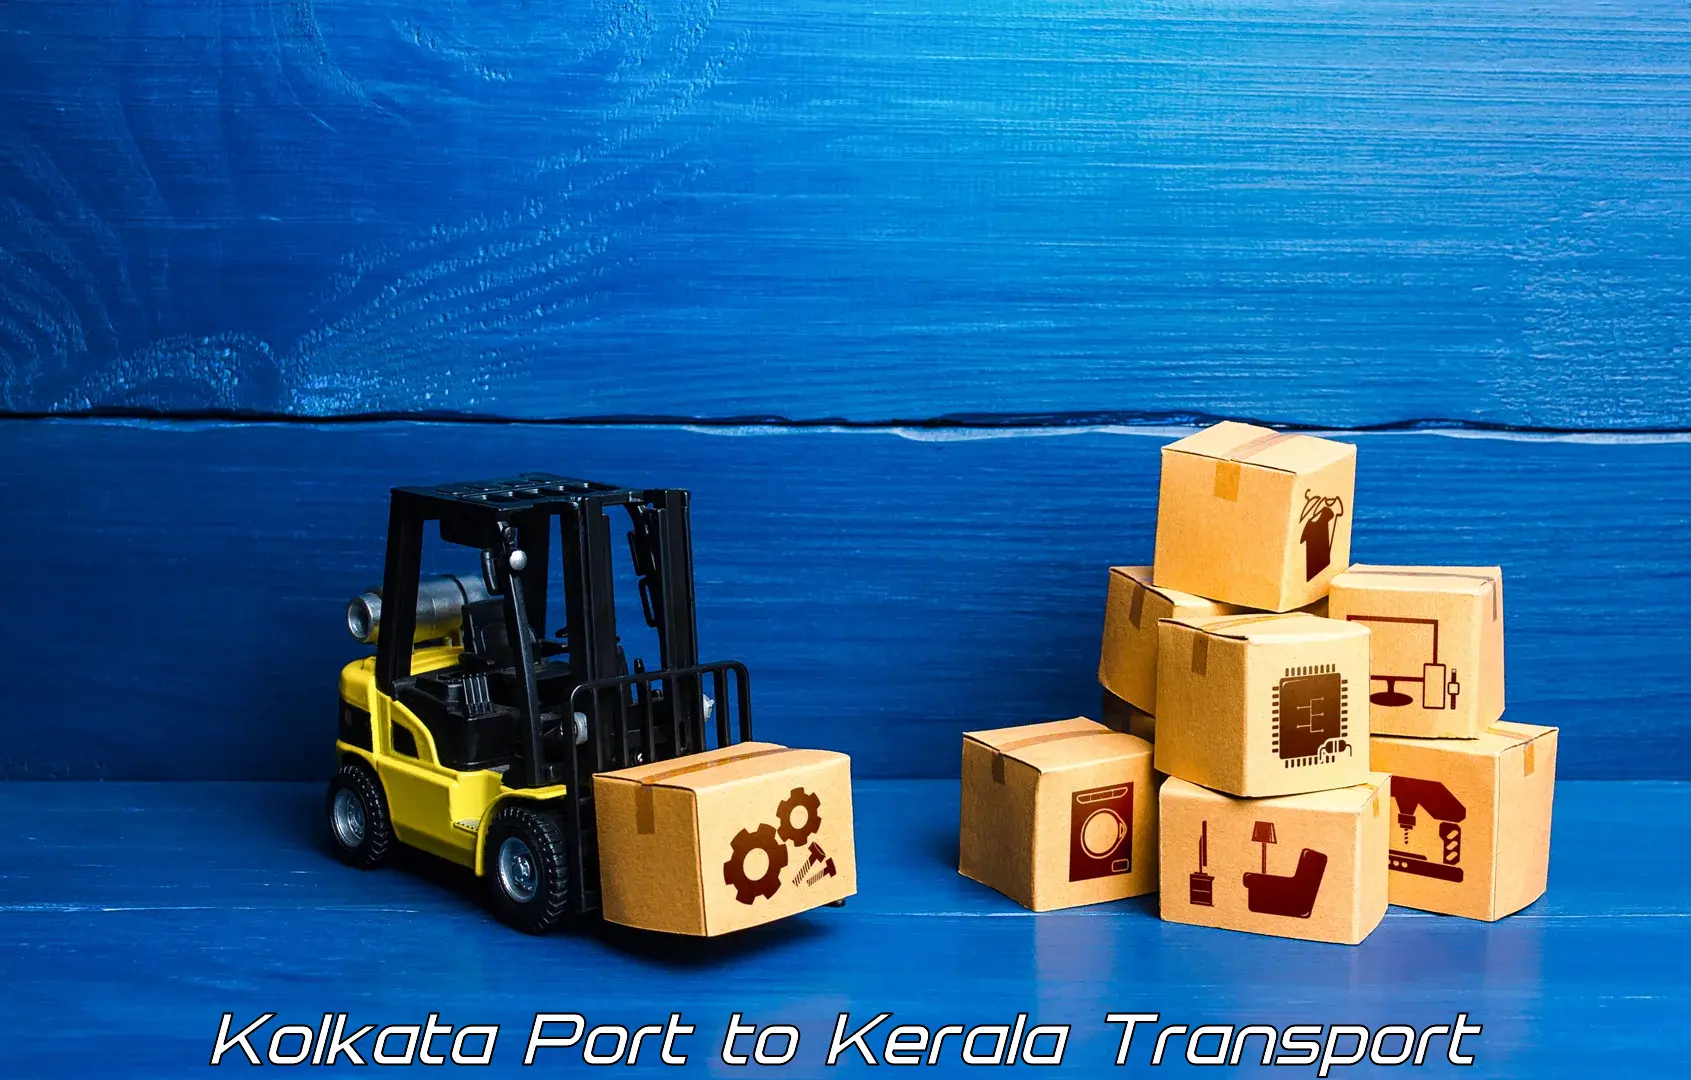 Commercial transport service Kolkata Port to Valanchery